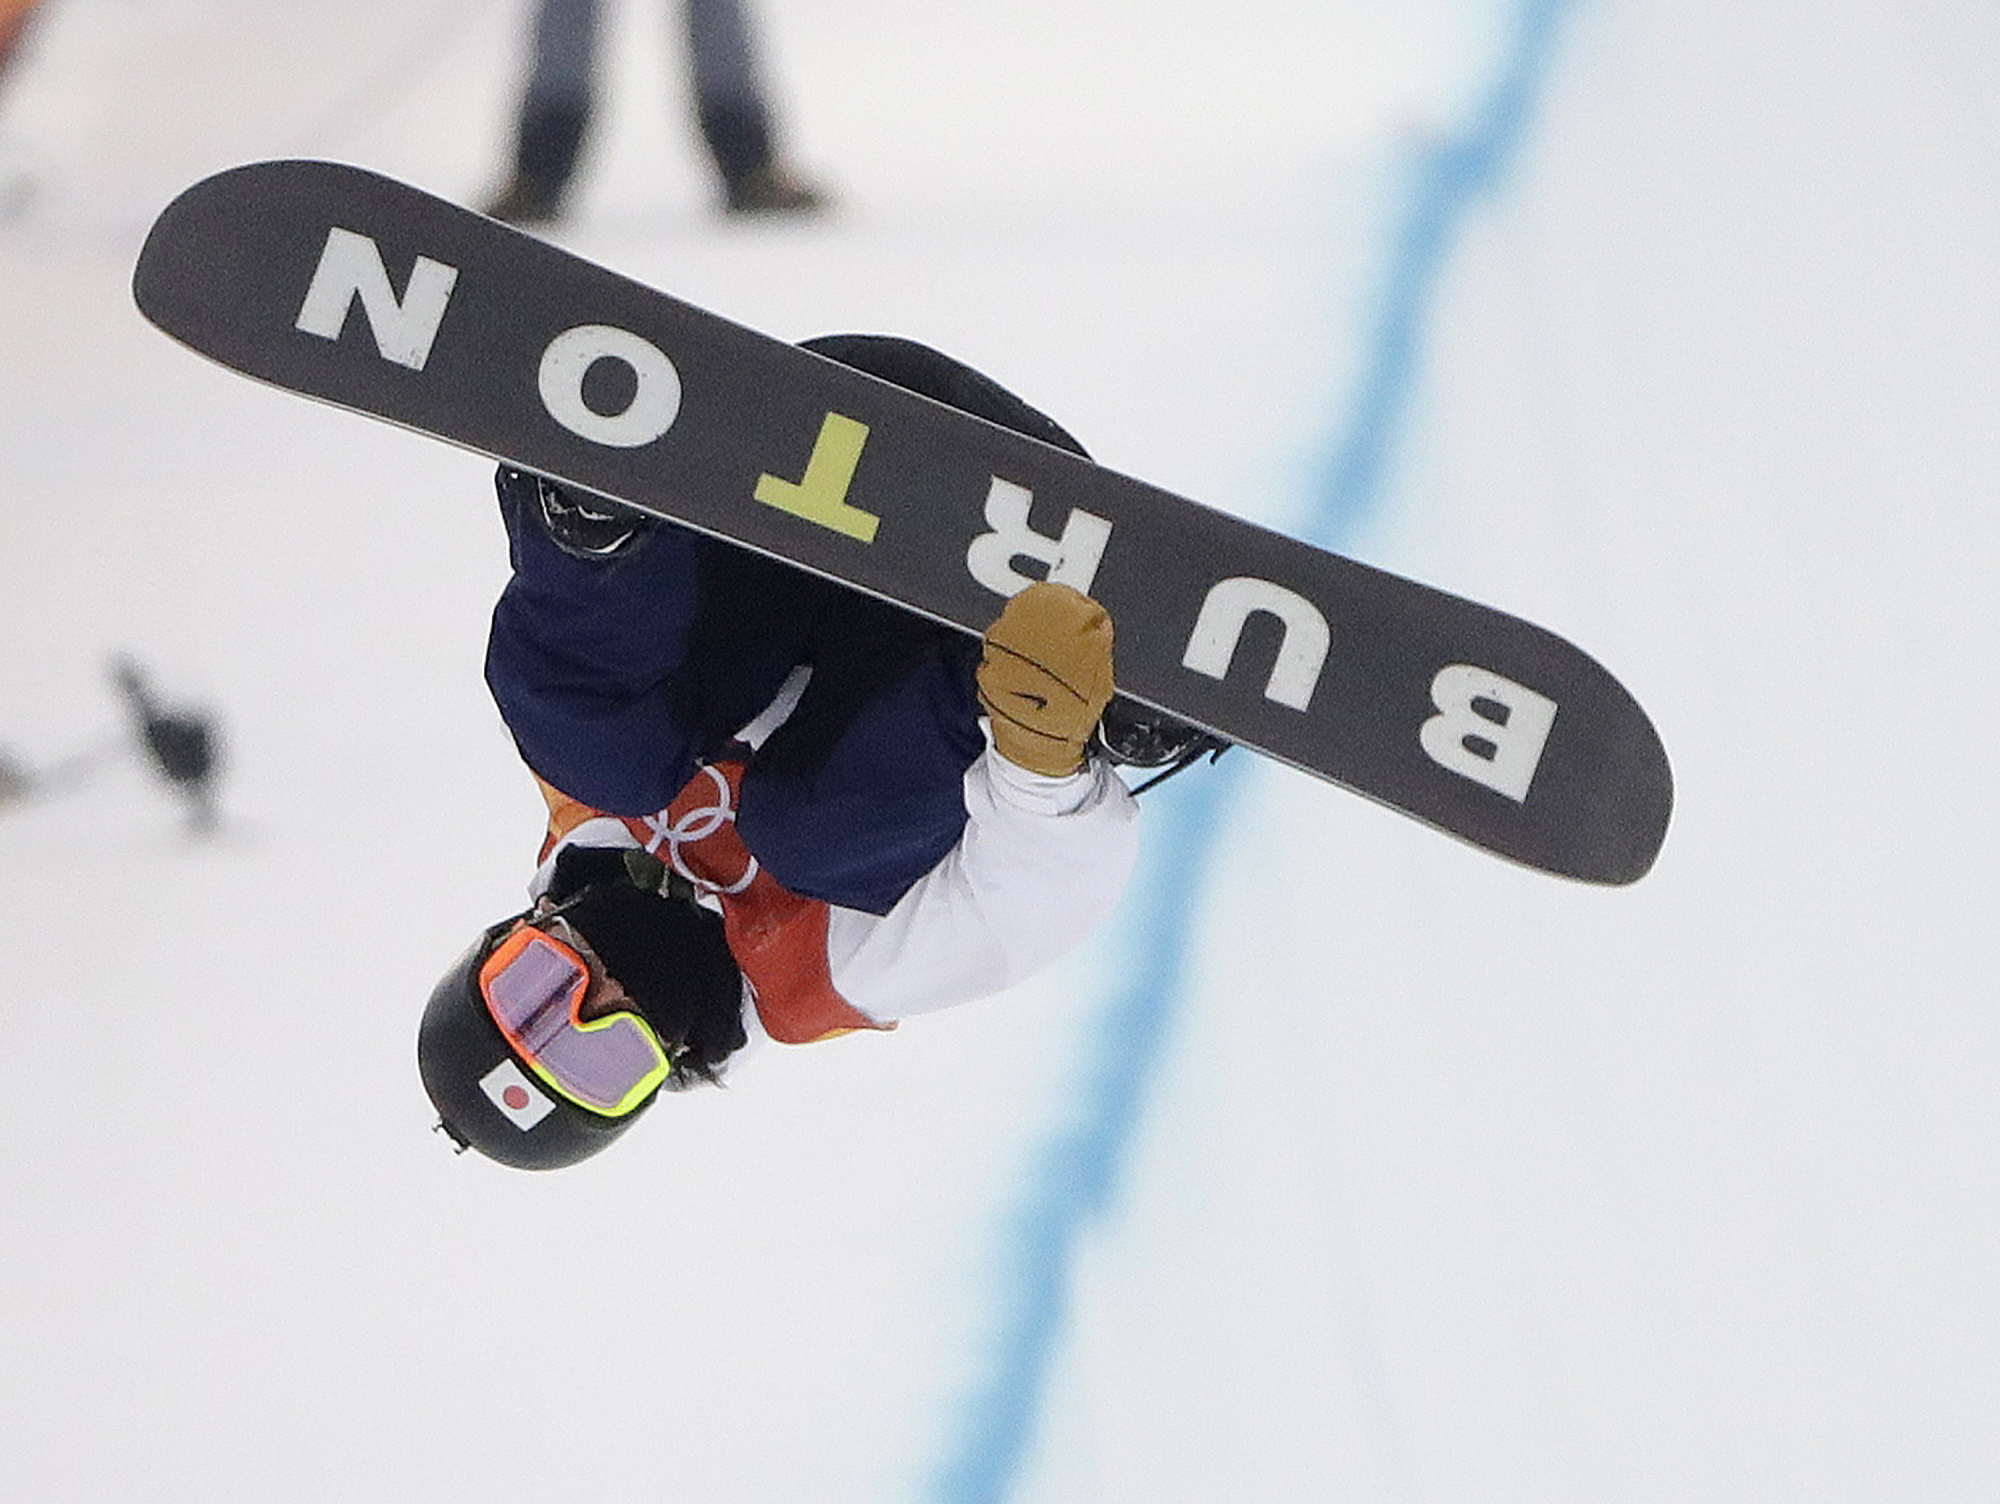 Snowboarder Ayumu Hirano takes silver in men's halfpipe behind